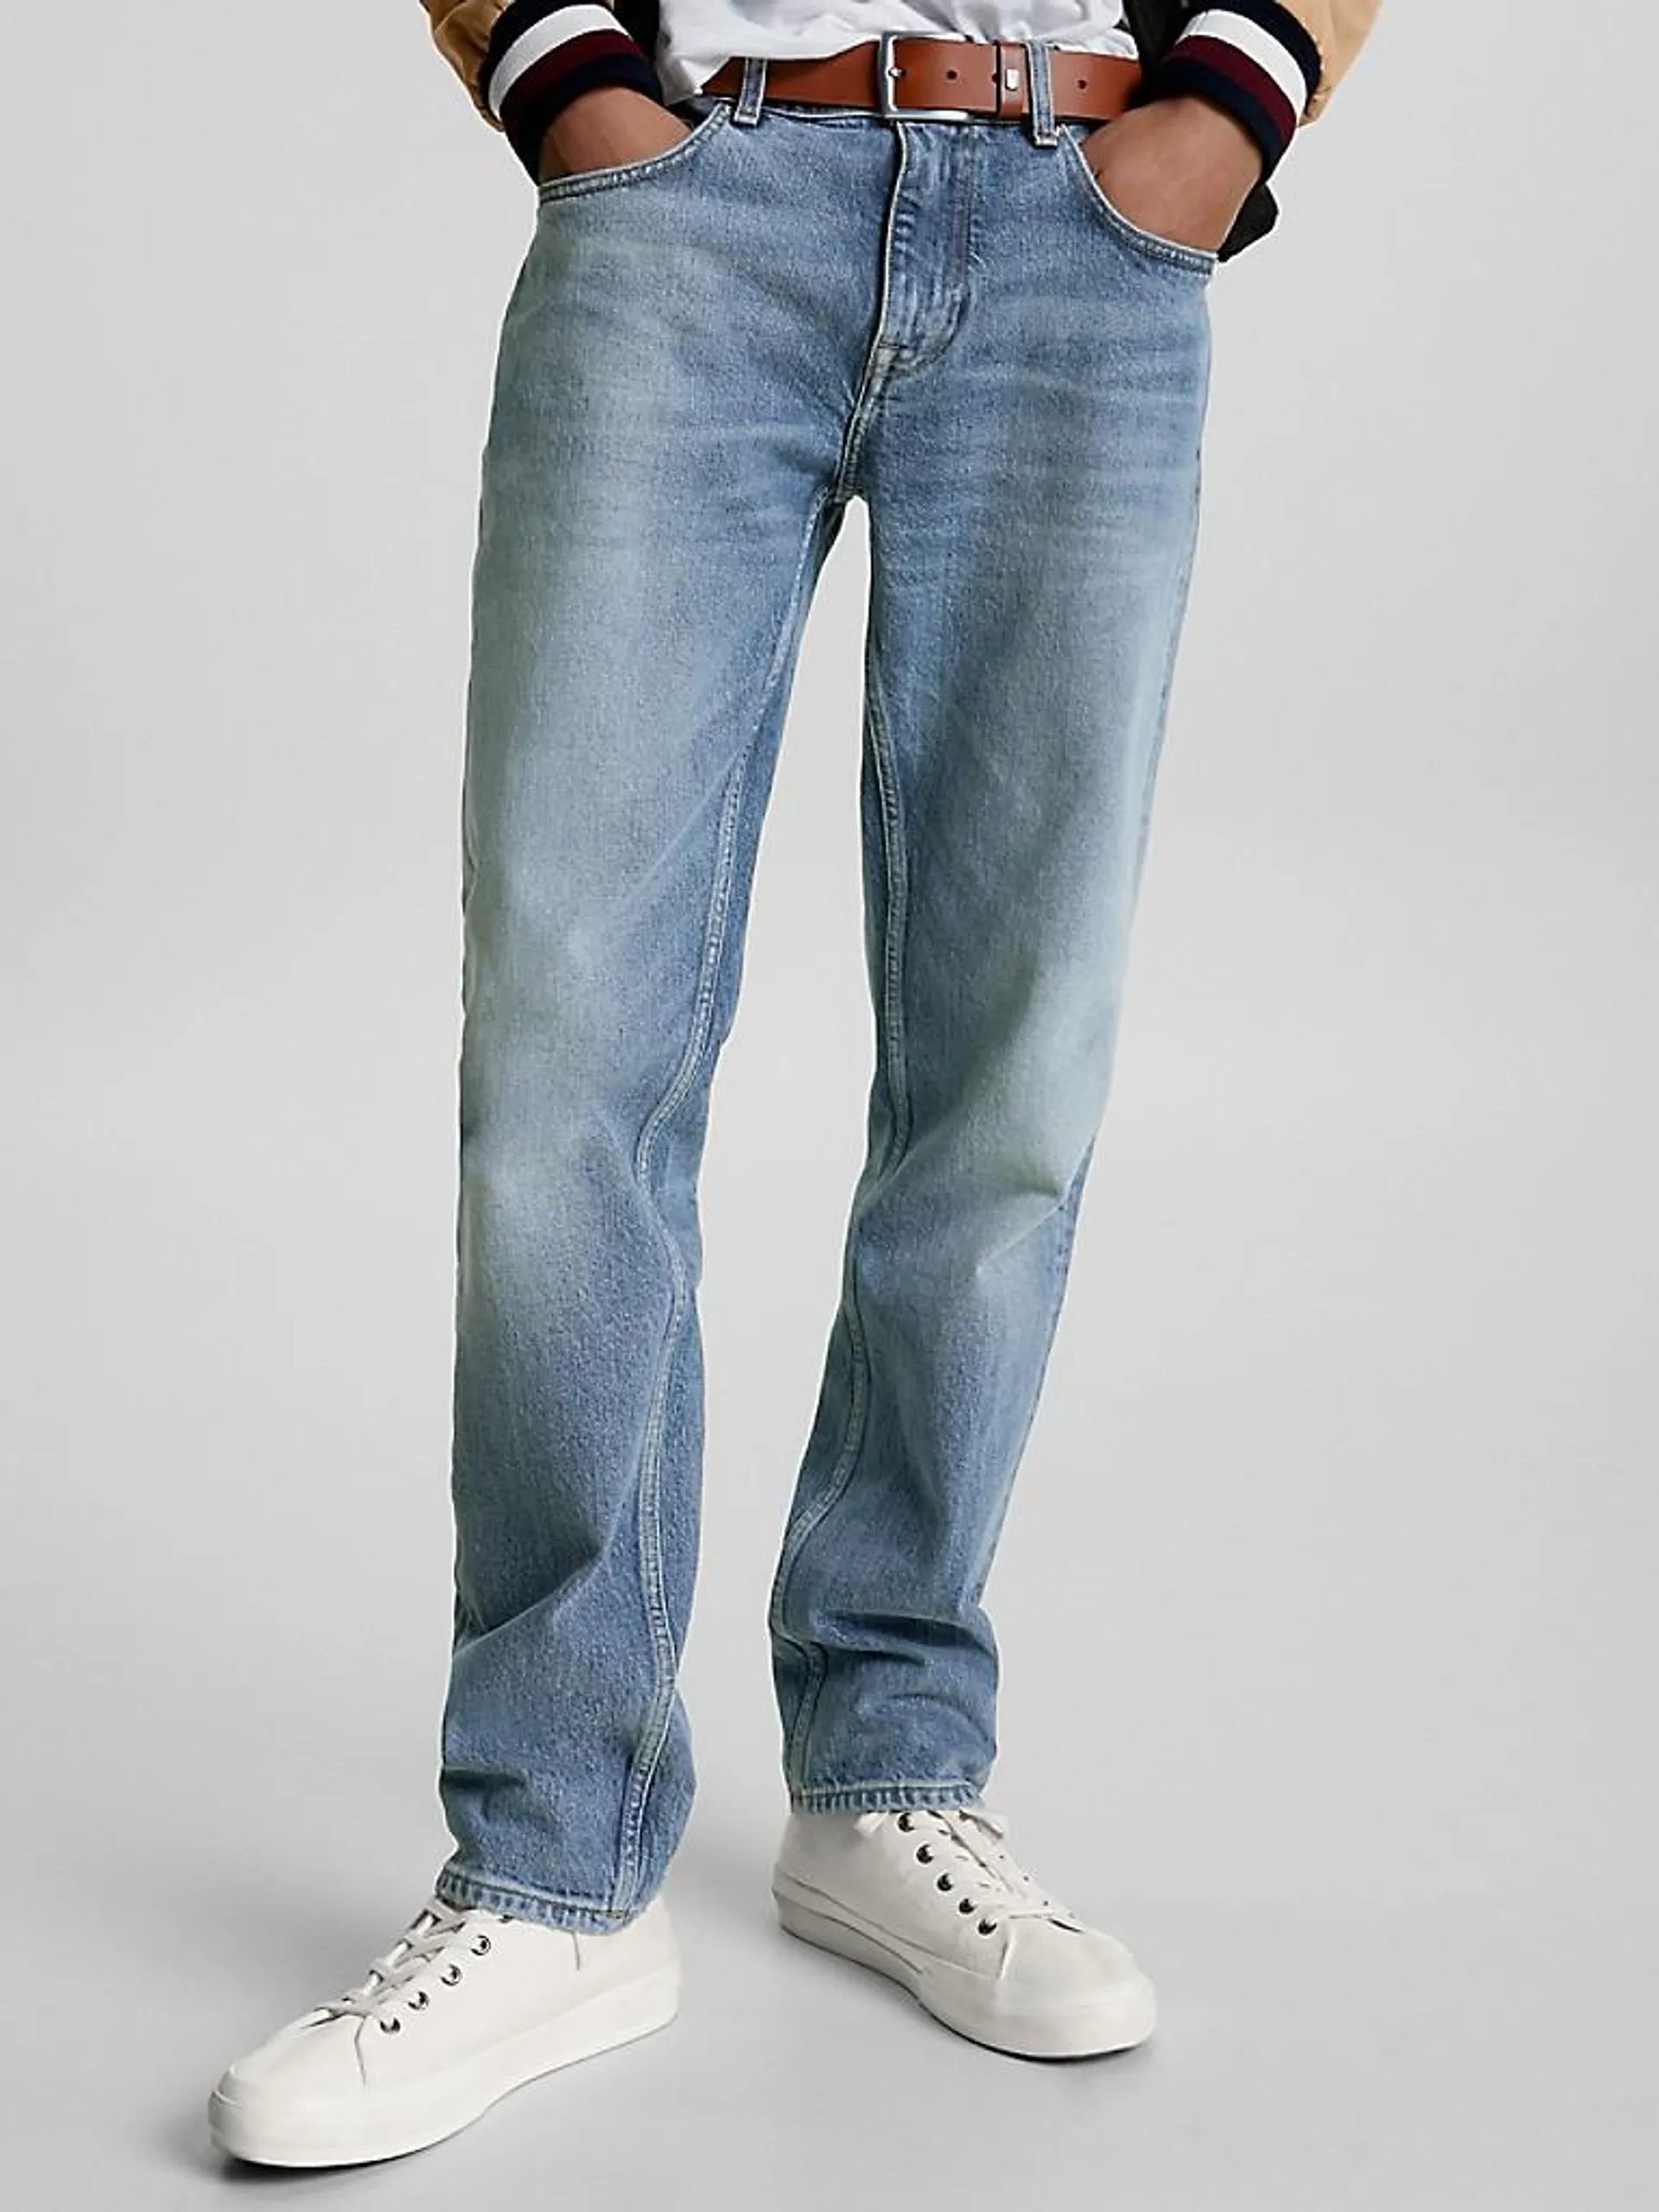 Tommy Hilfiger X Shawn Mendes Denton Straight Fit Jean